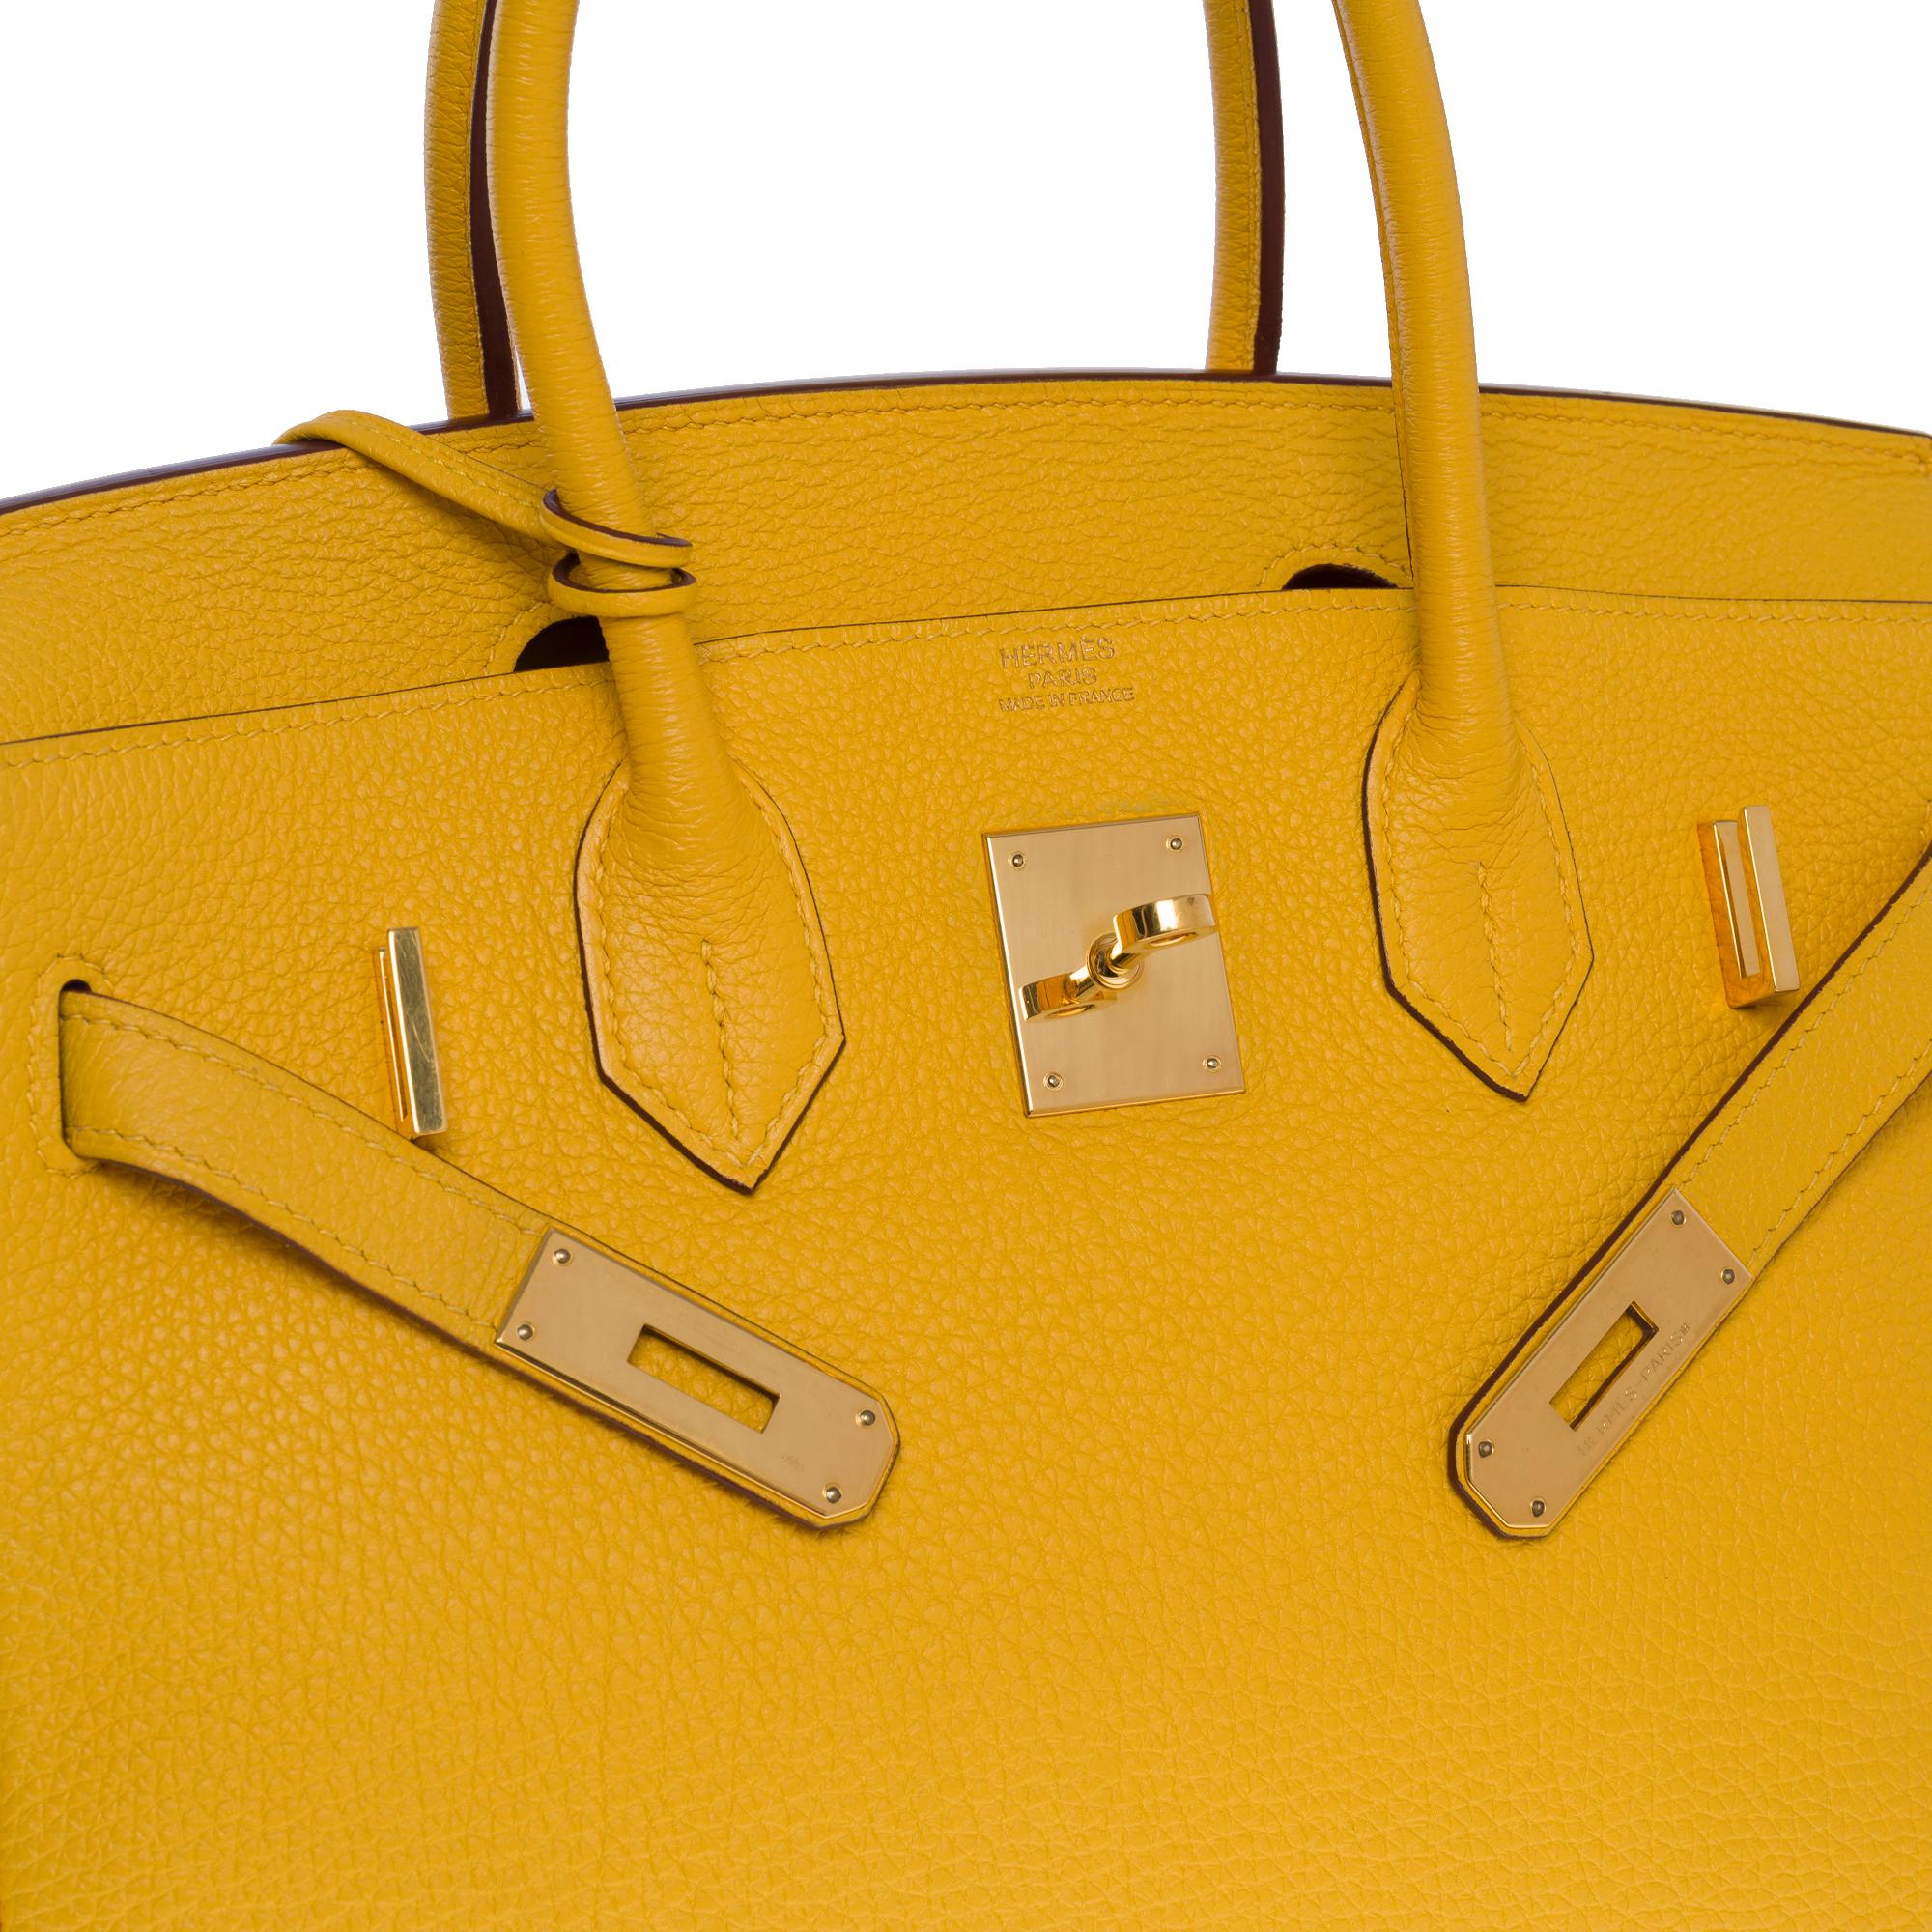 Amazing & Bright Hermès Birkin 30 handbag in Yellow Togo leather, GHW For Sale 2